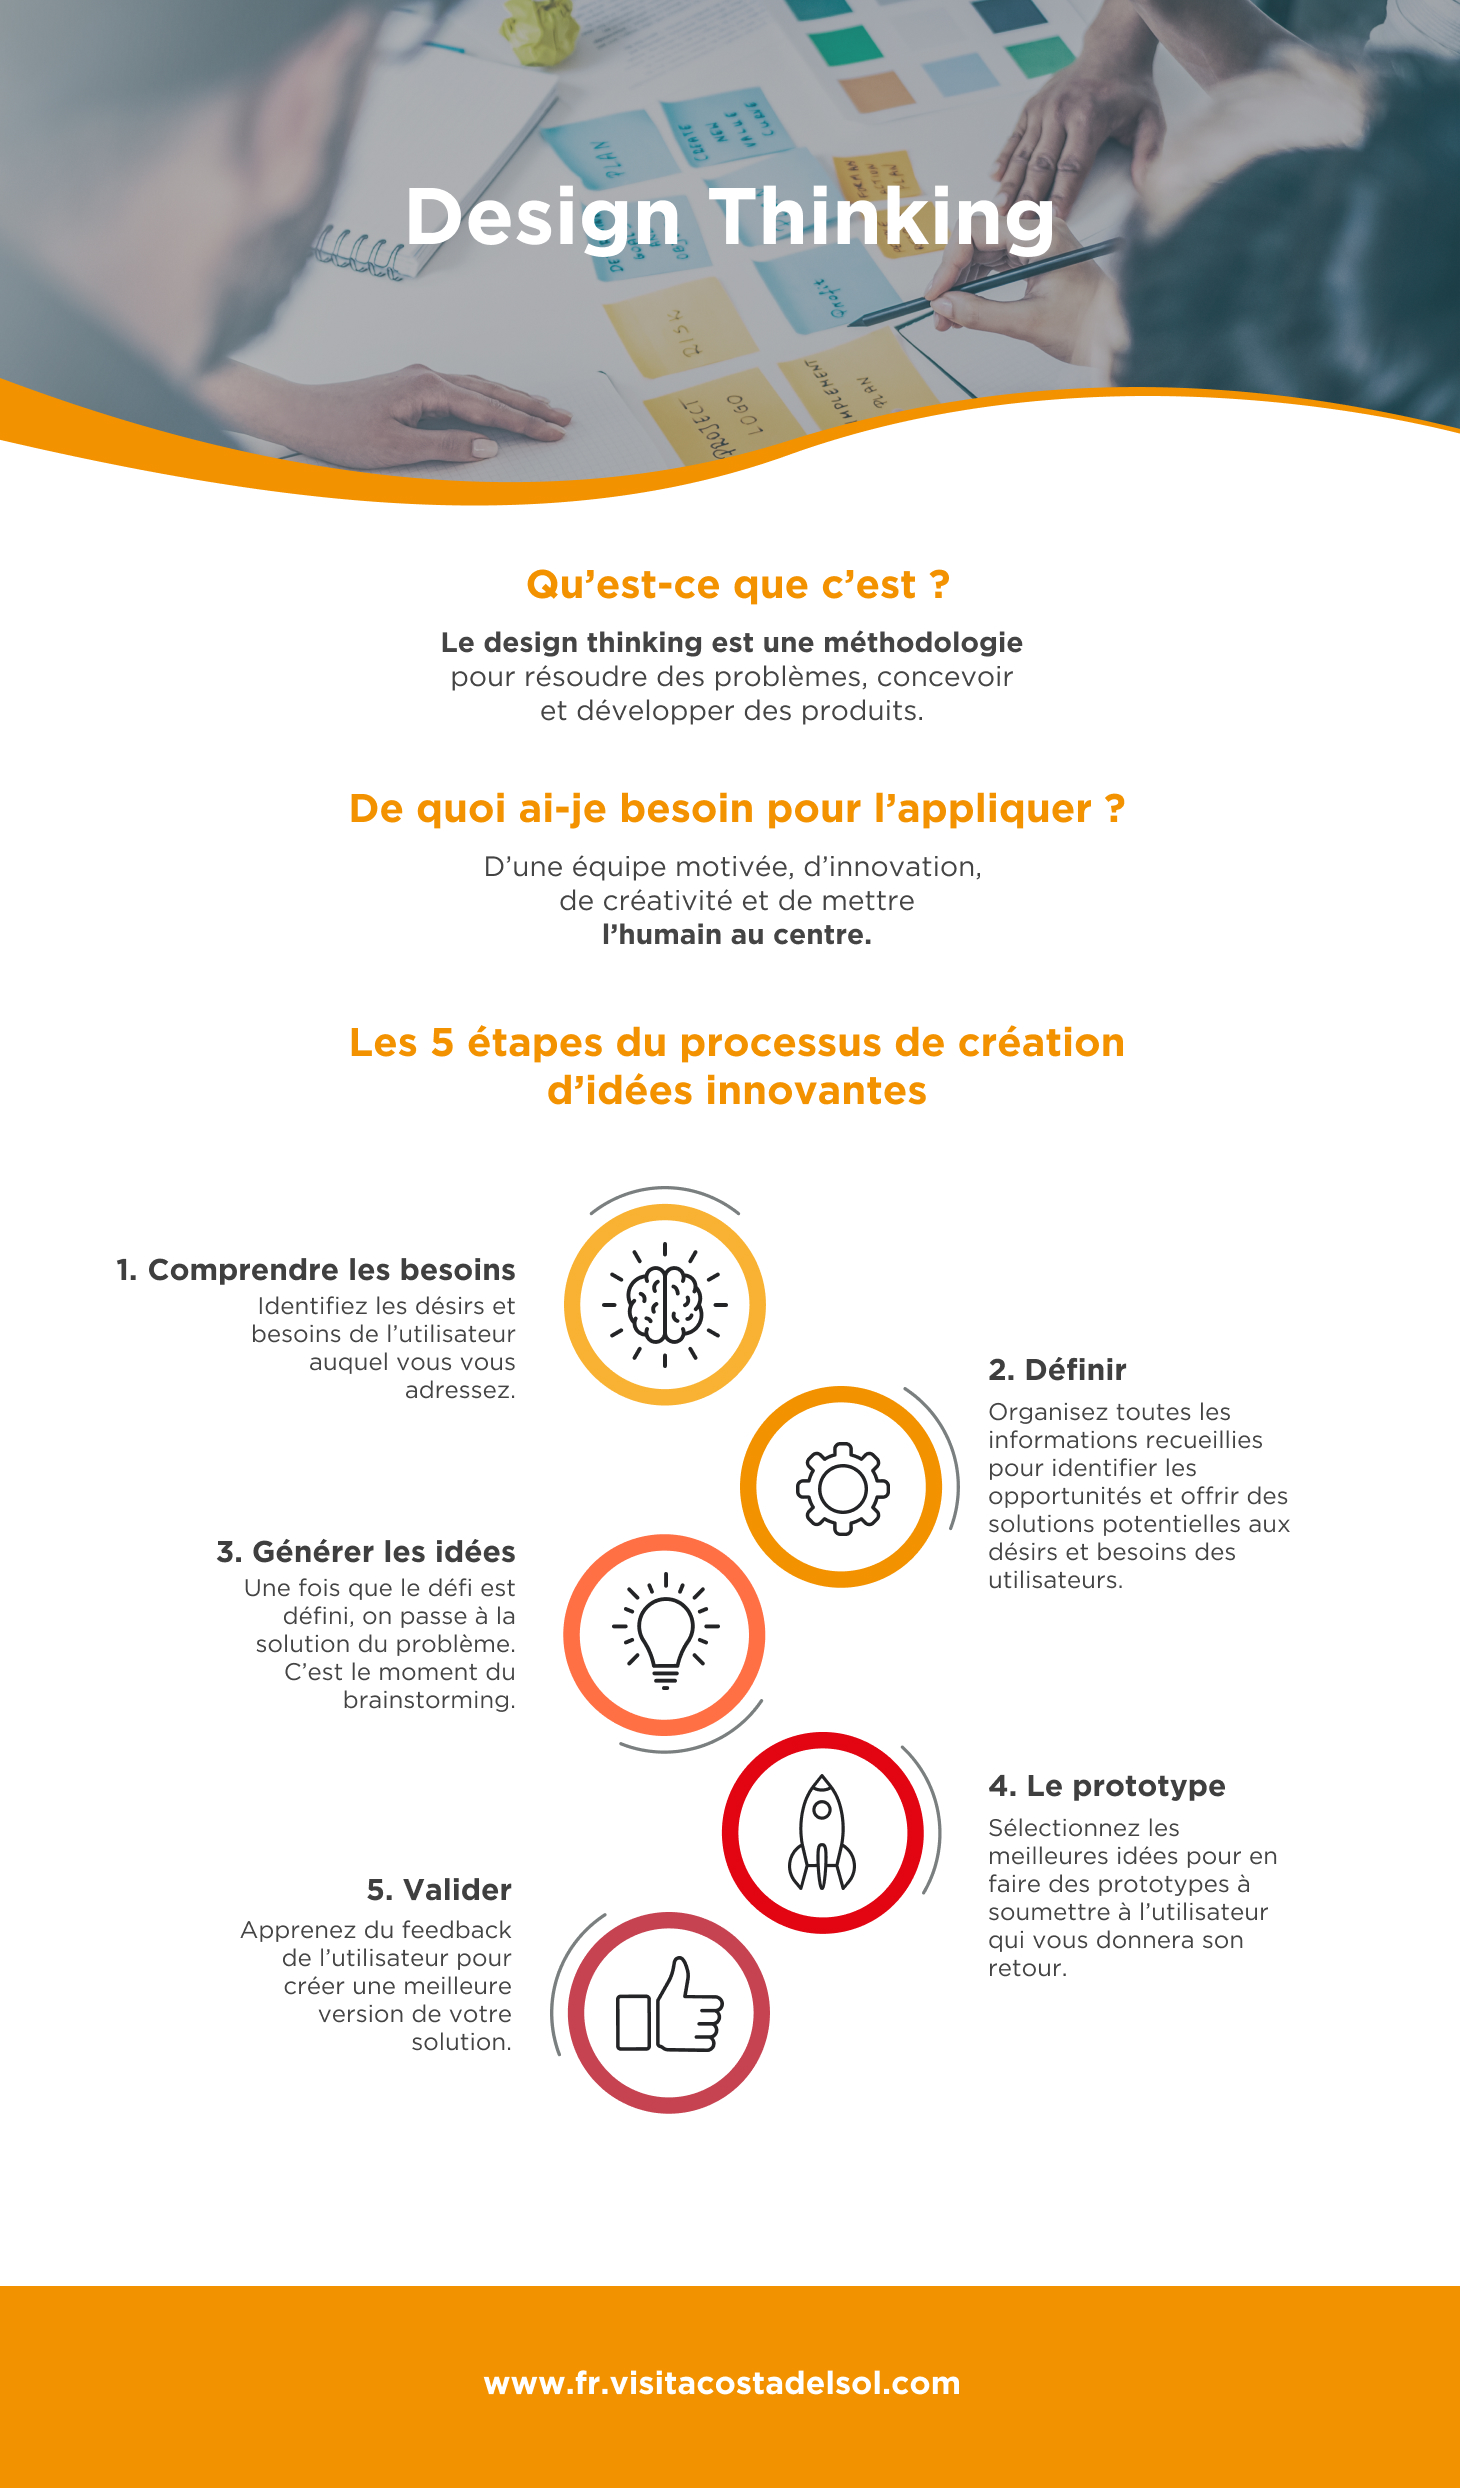 csol_infografia_2_design thinking_FR